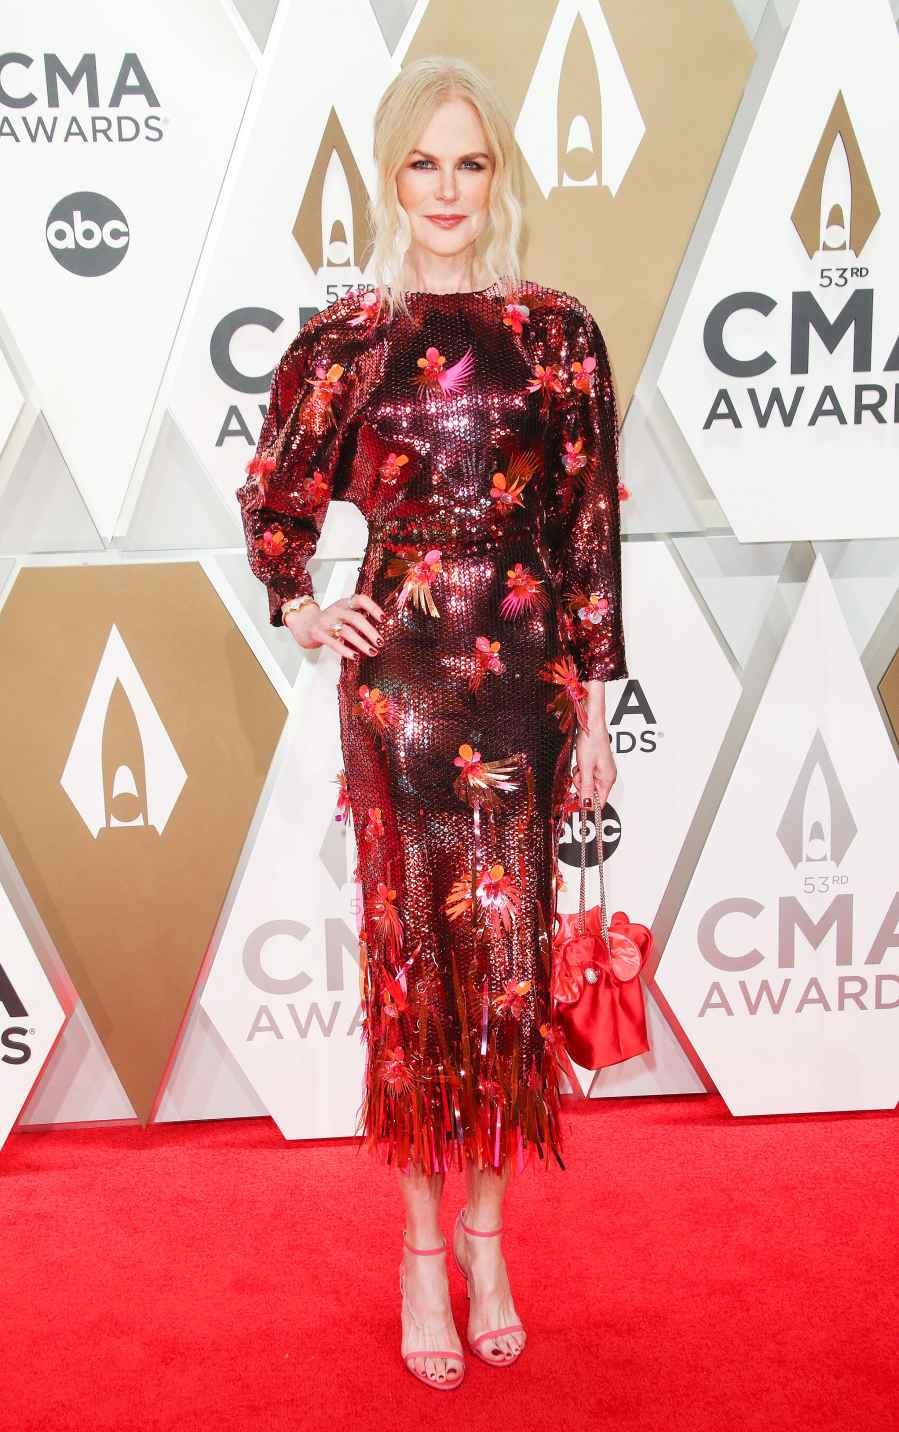 2019 CMA Awards - Nicole Kidman